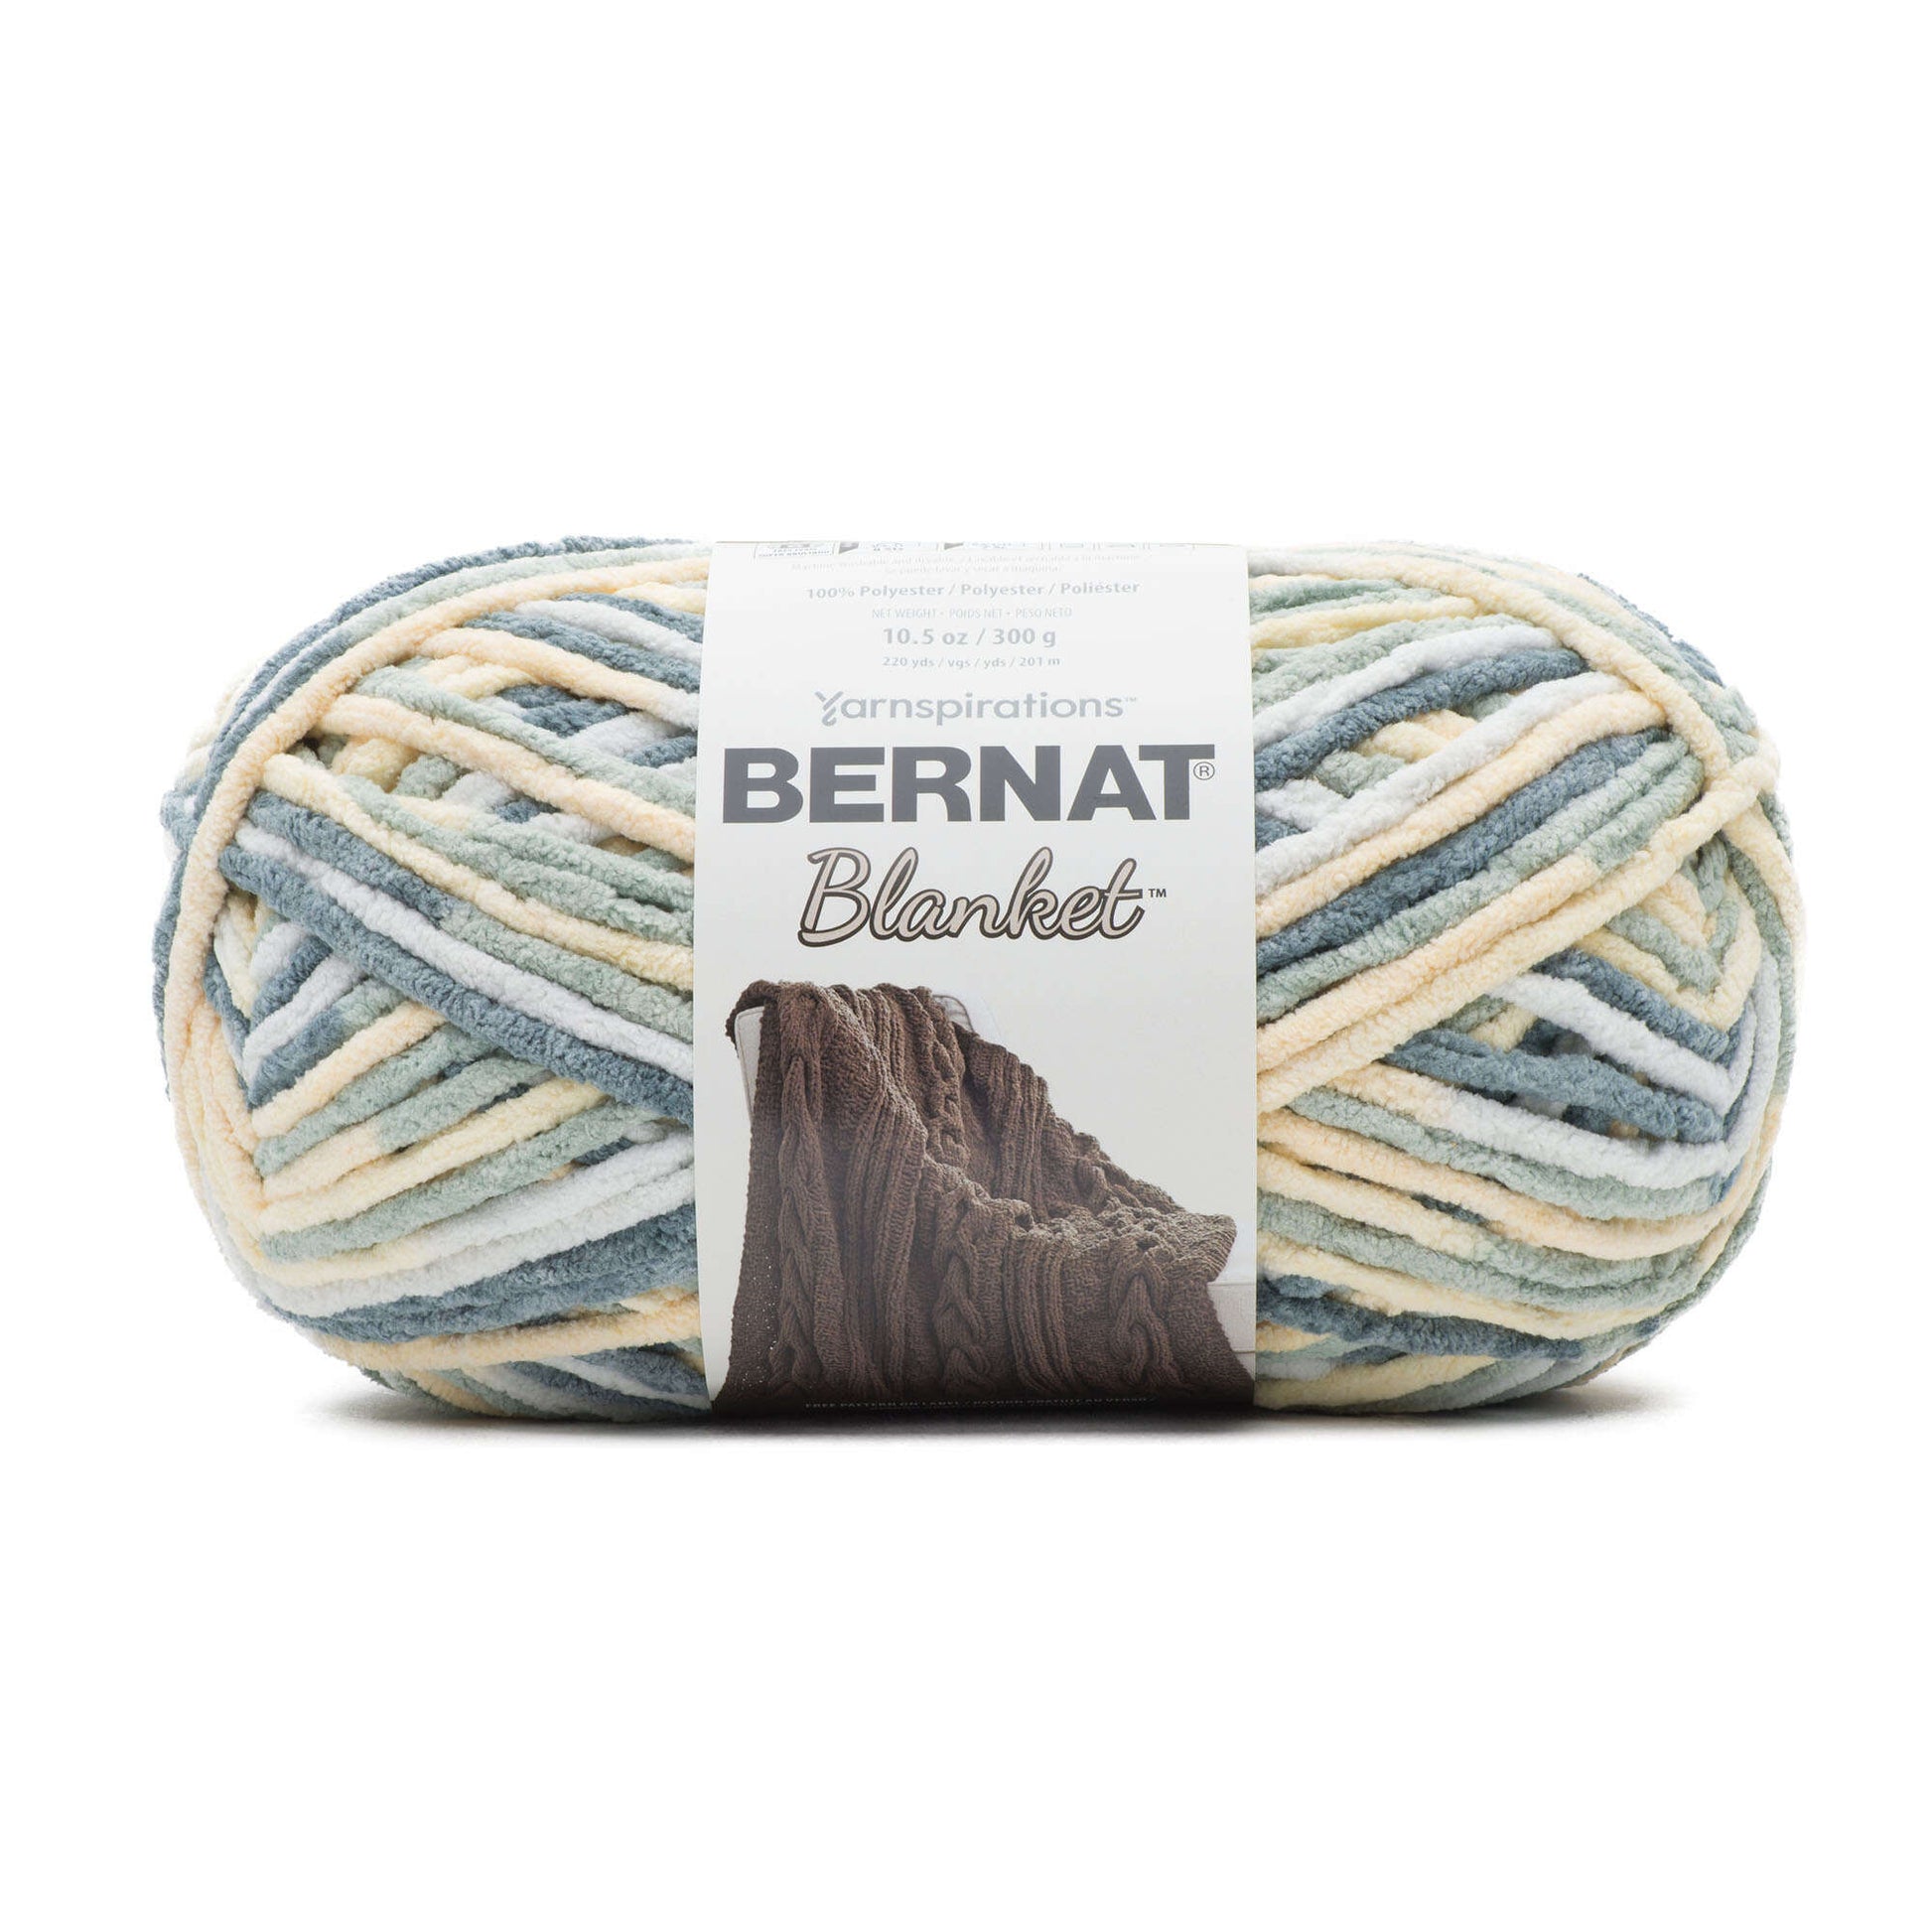 Bernat Blanket Yarn (300g/10.5oz) Soft Sunshine Green